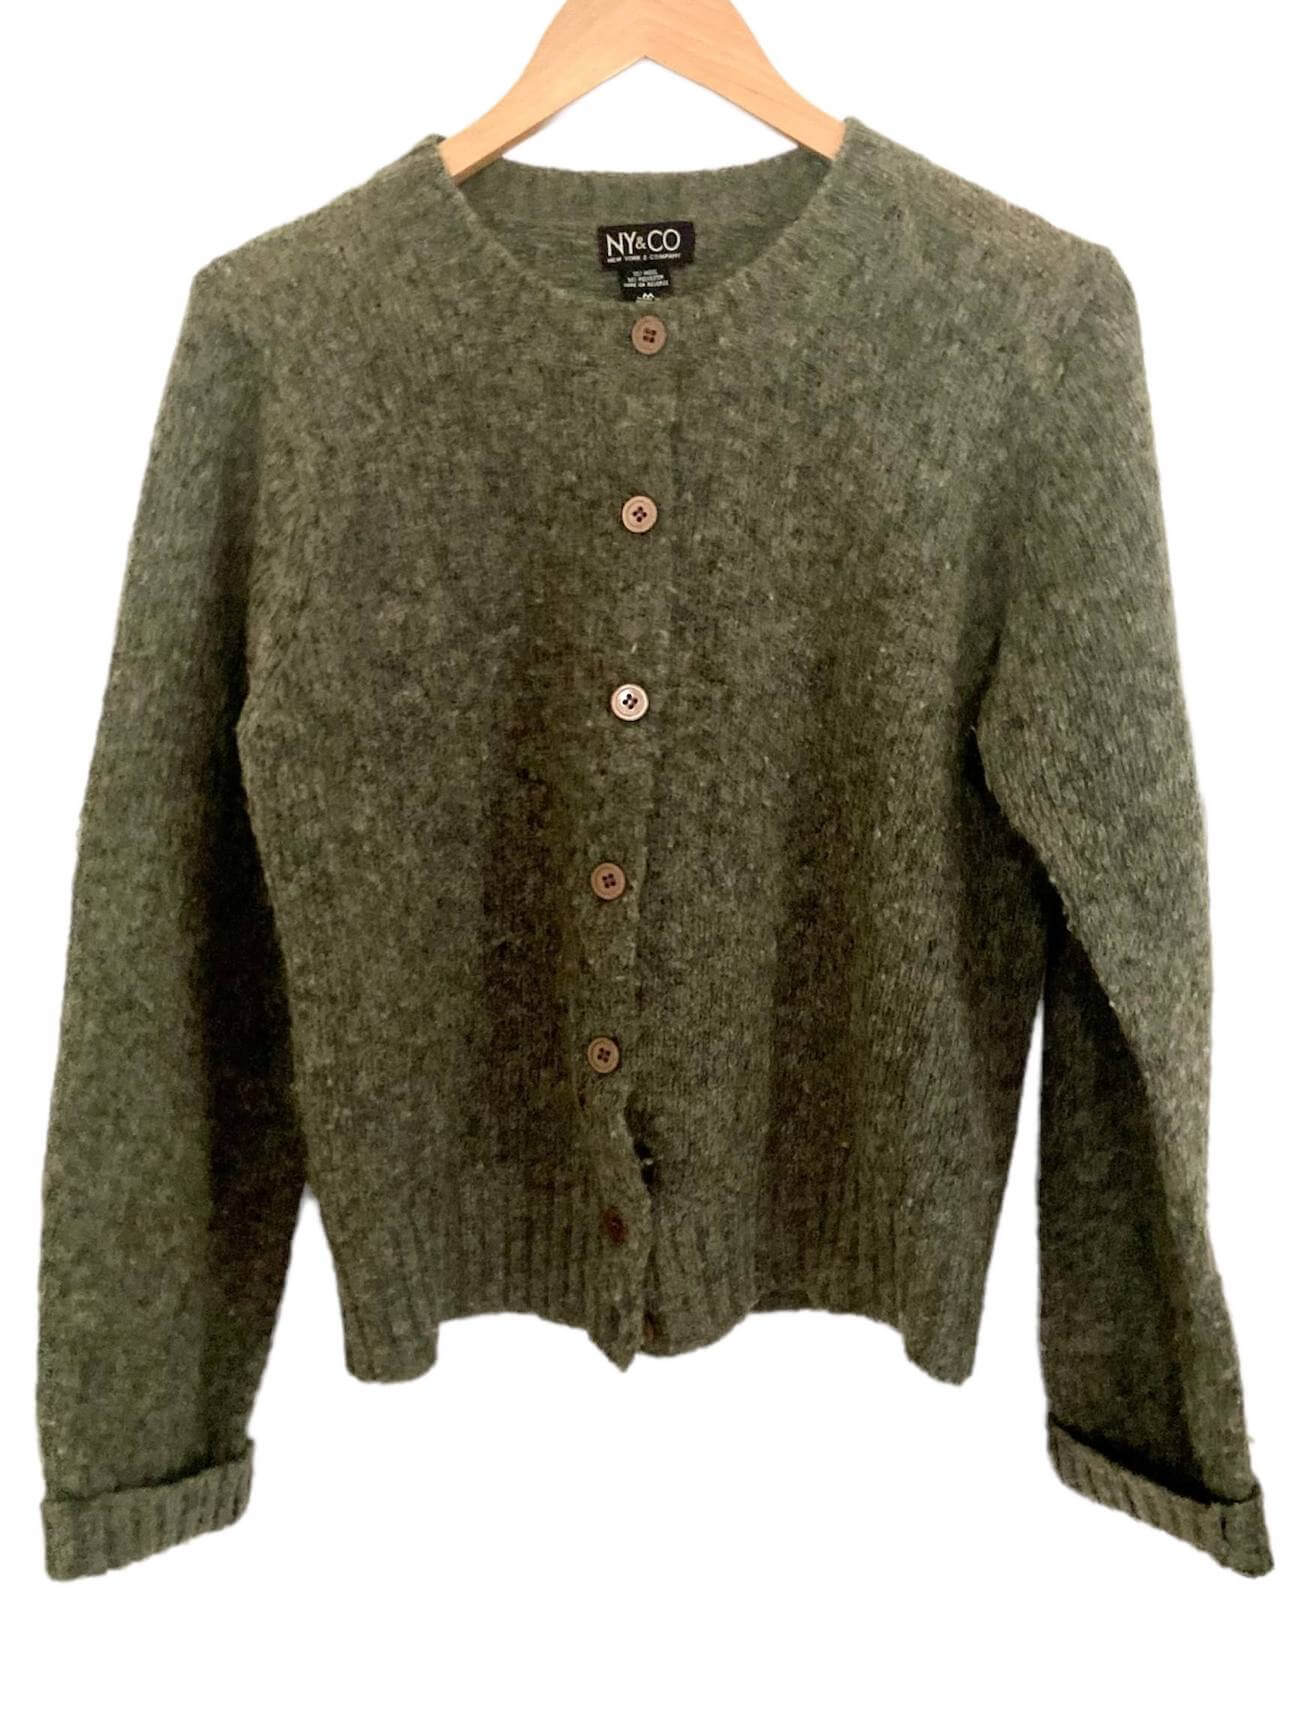 Soft Autumn NY&CO wool cardigan sweater